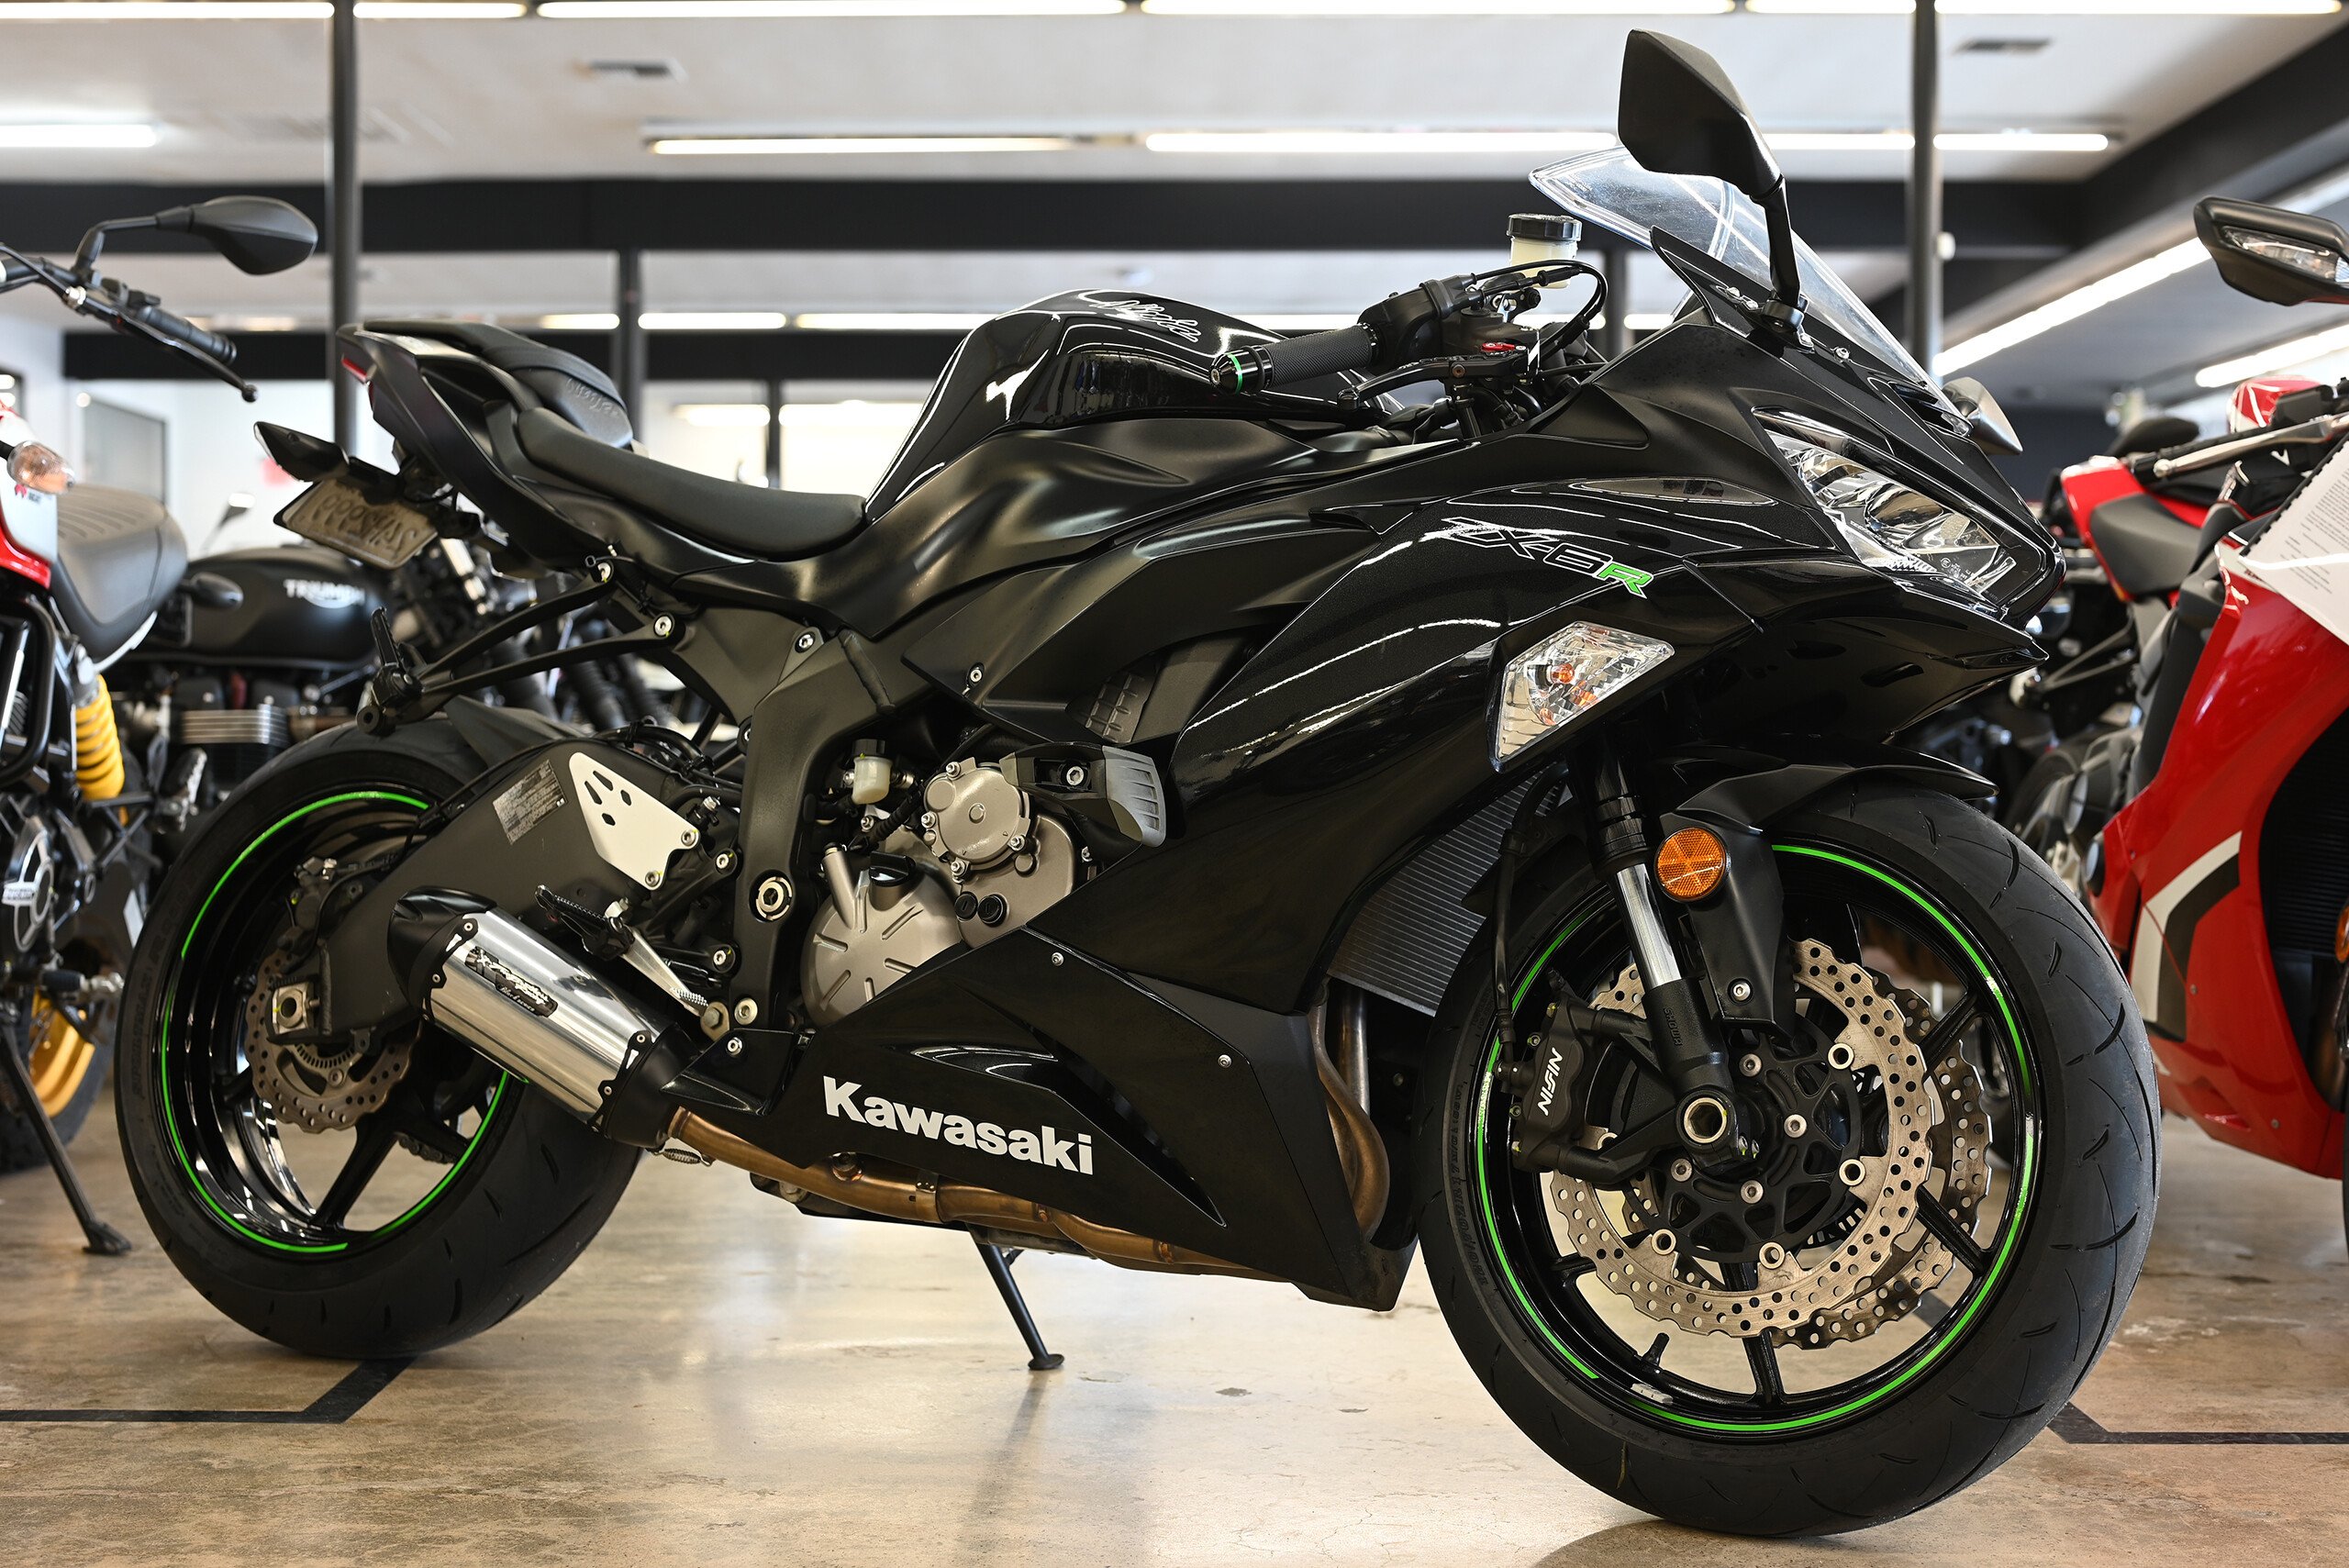 Kawasaki Ninja ZX-6R Motorcycles for Sale near Santa Ana 